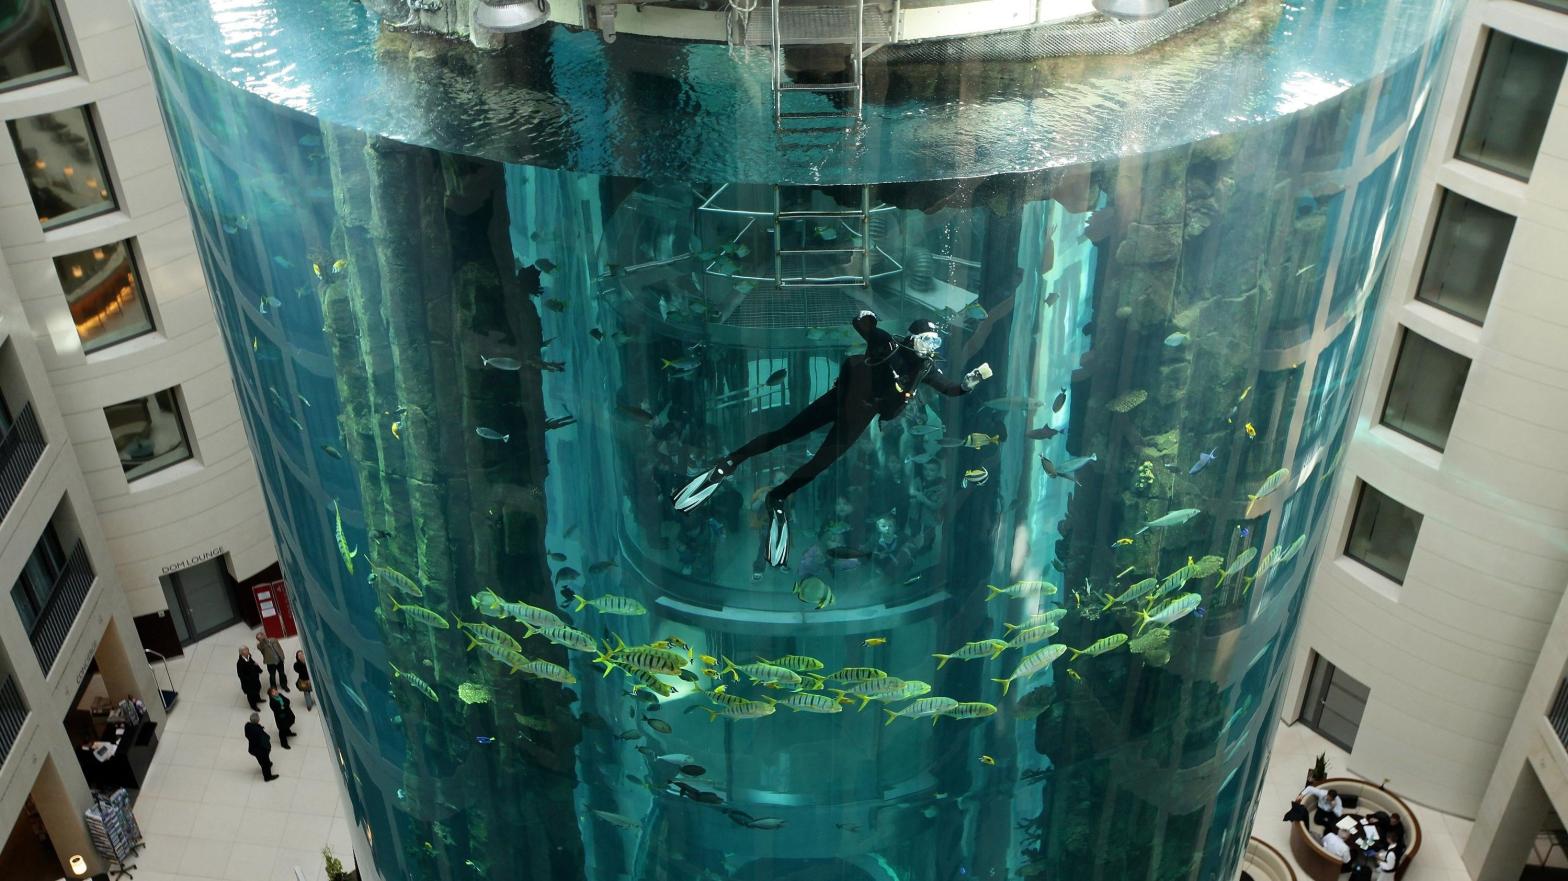 The AquaDom Aquarium in Berlin, Germany. (Photo: Sean Gallup, Getty Images)